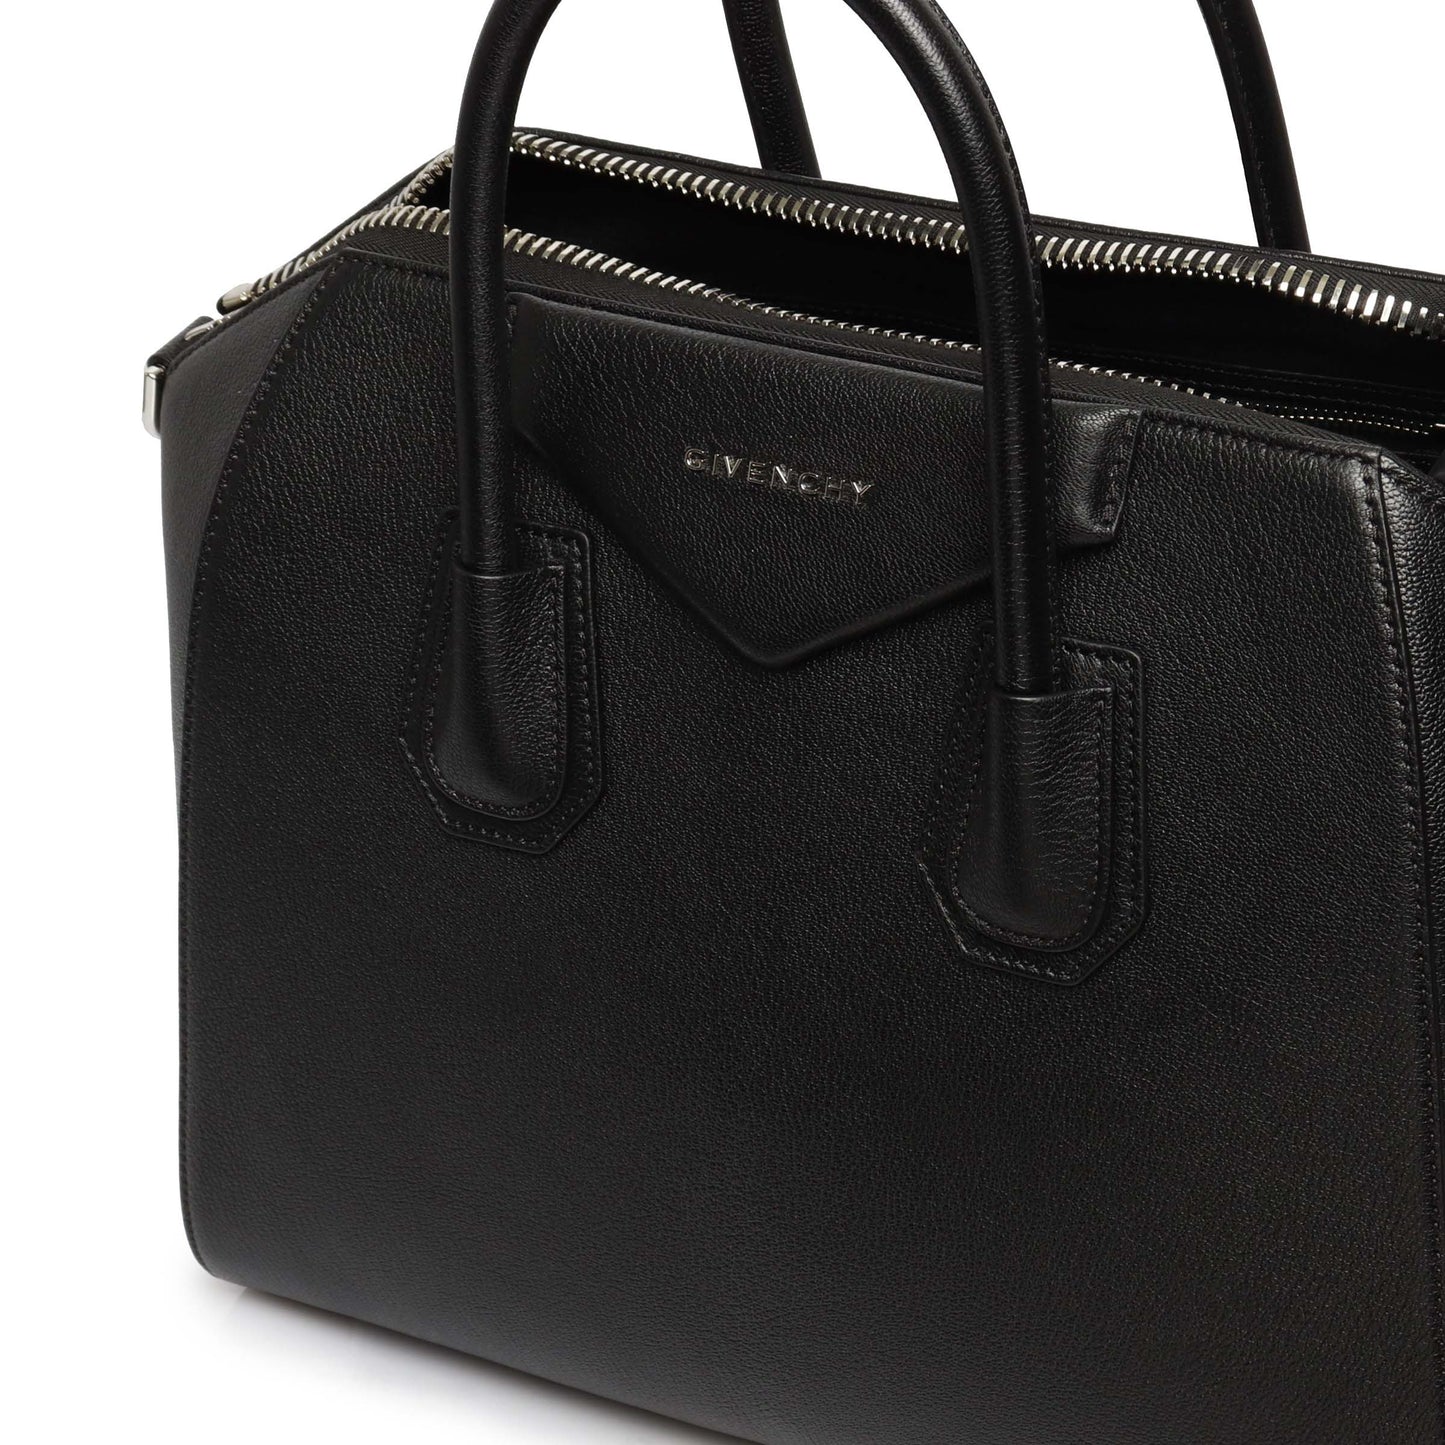 Medium Antigona Bag in Grained Leather in Black